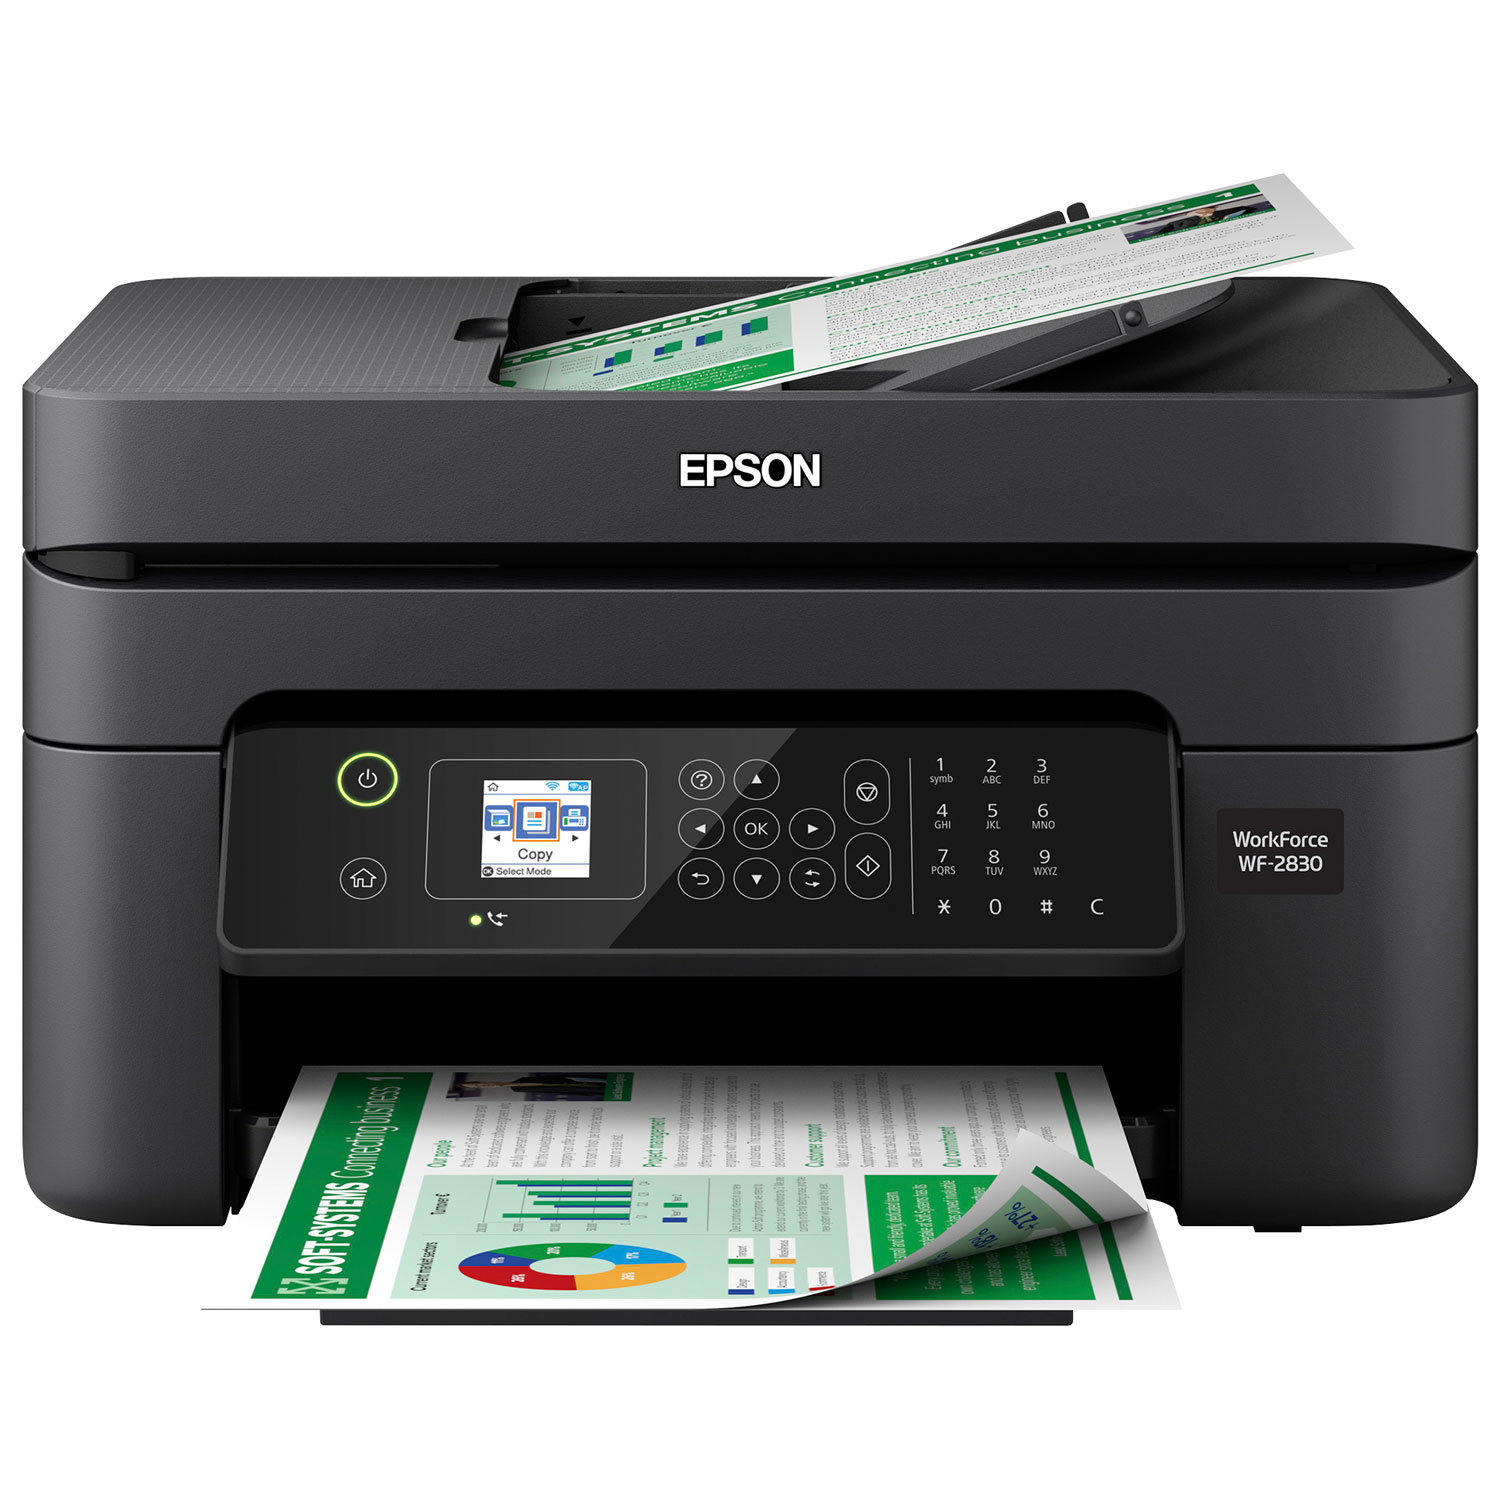 Epson WorkForce WF-2830 Wireless All-In-One Inkjet Printer